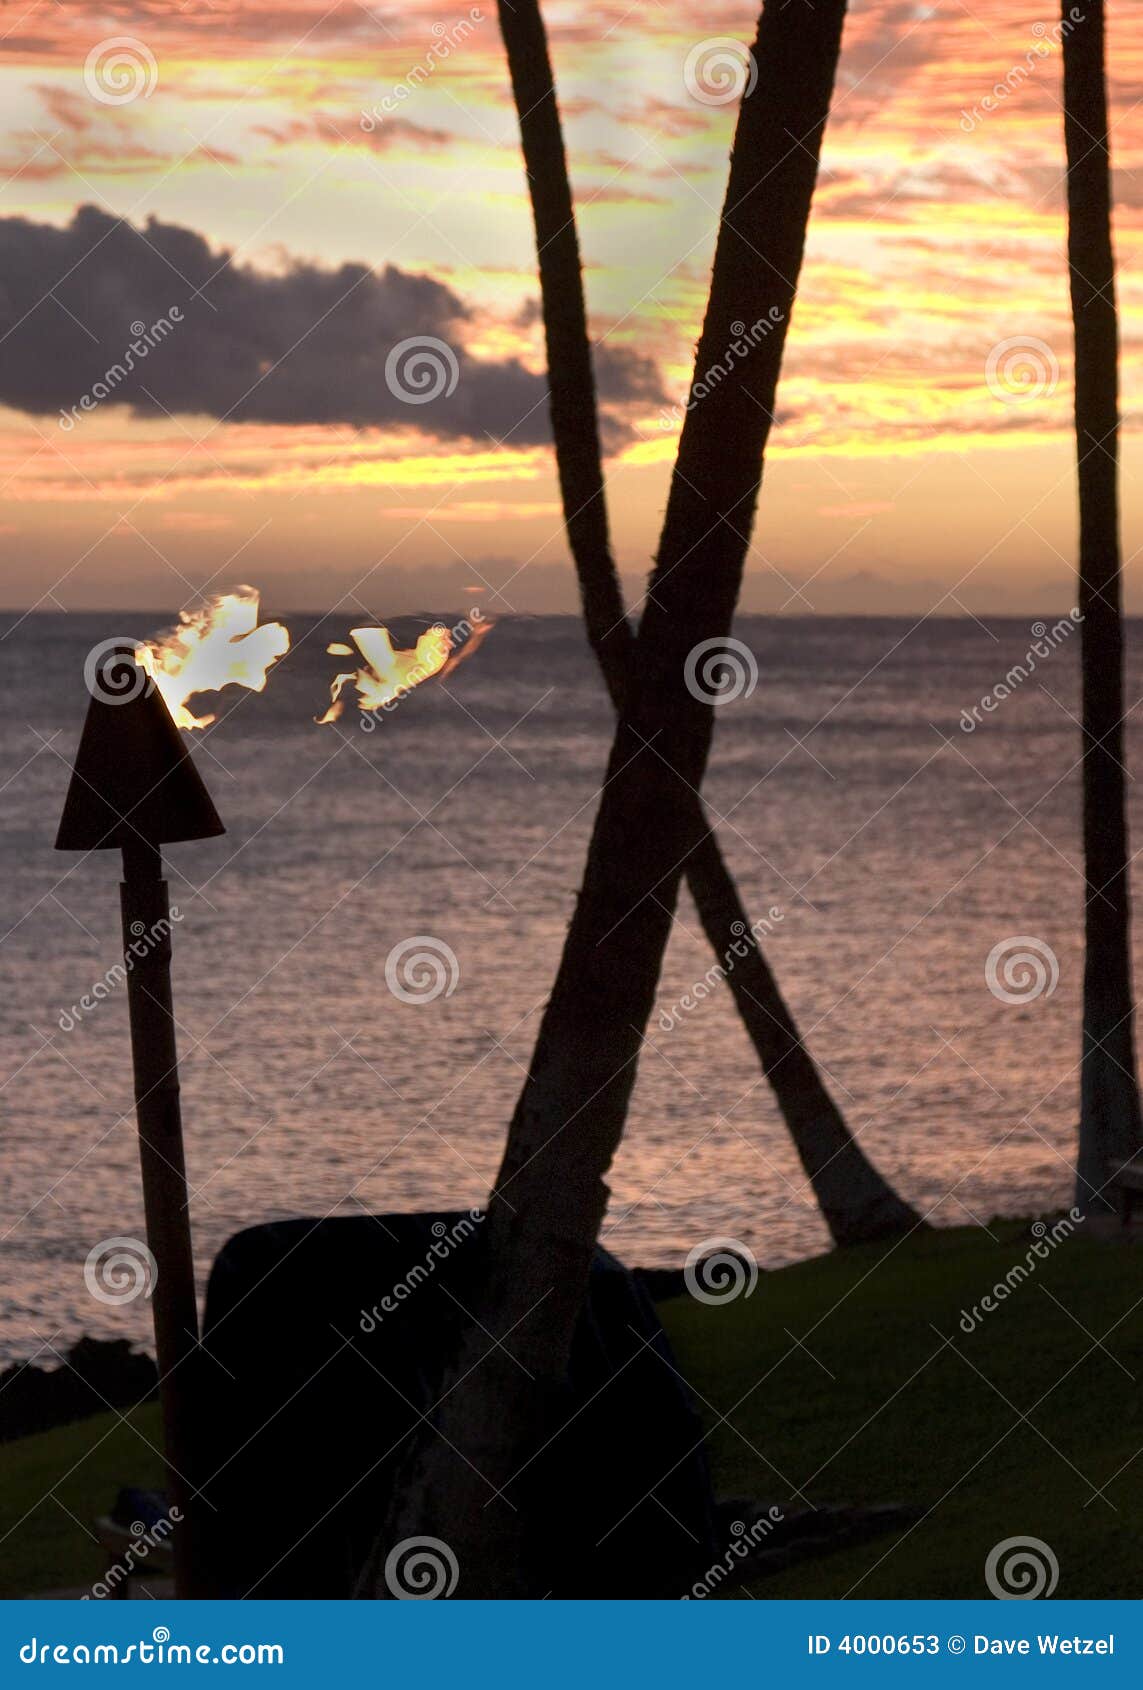 silhoutte of torch in hawaii